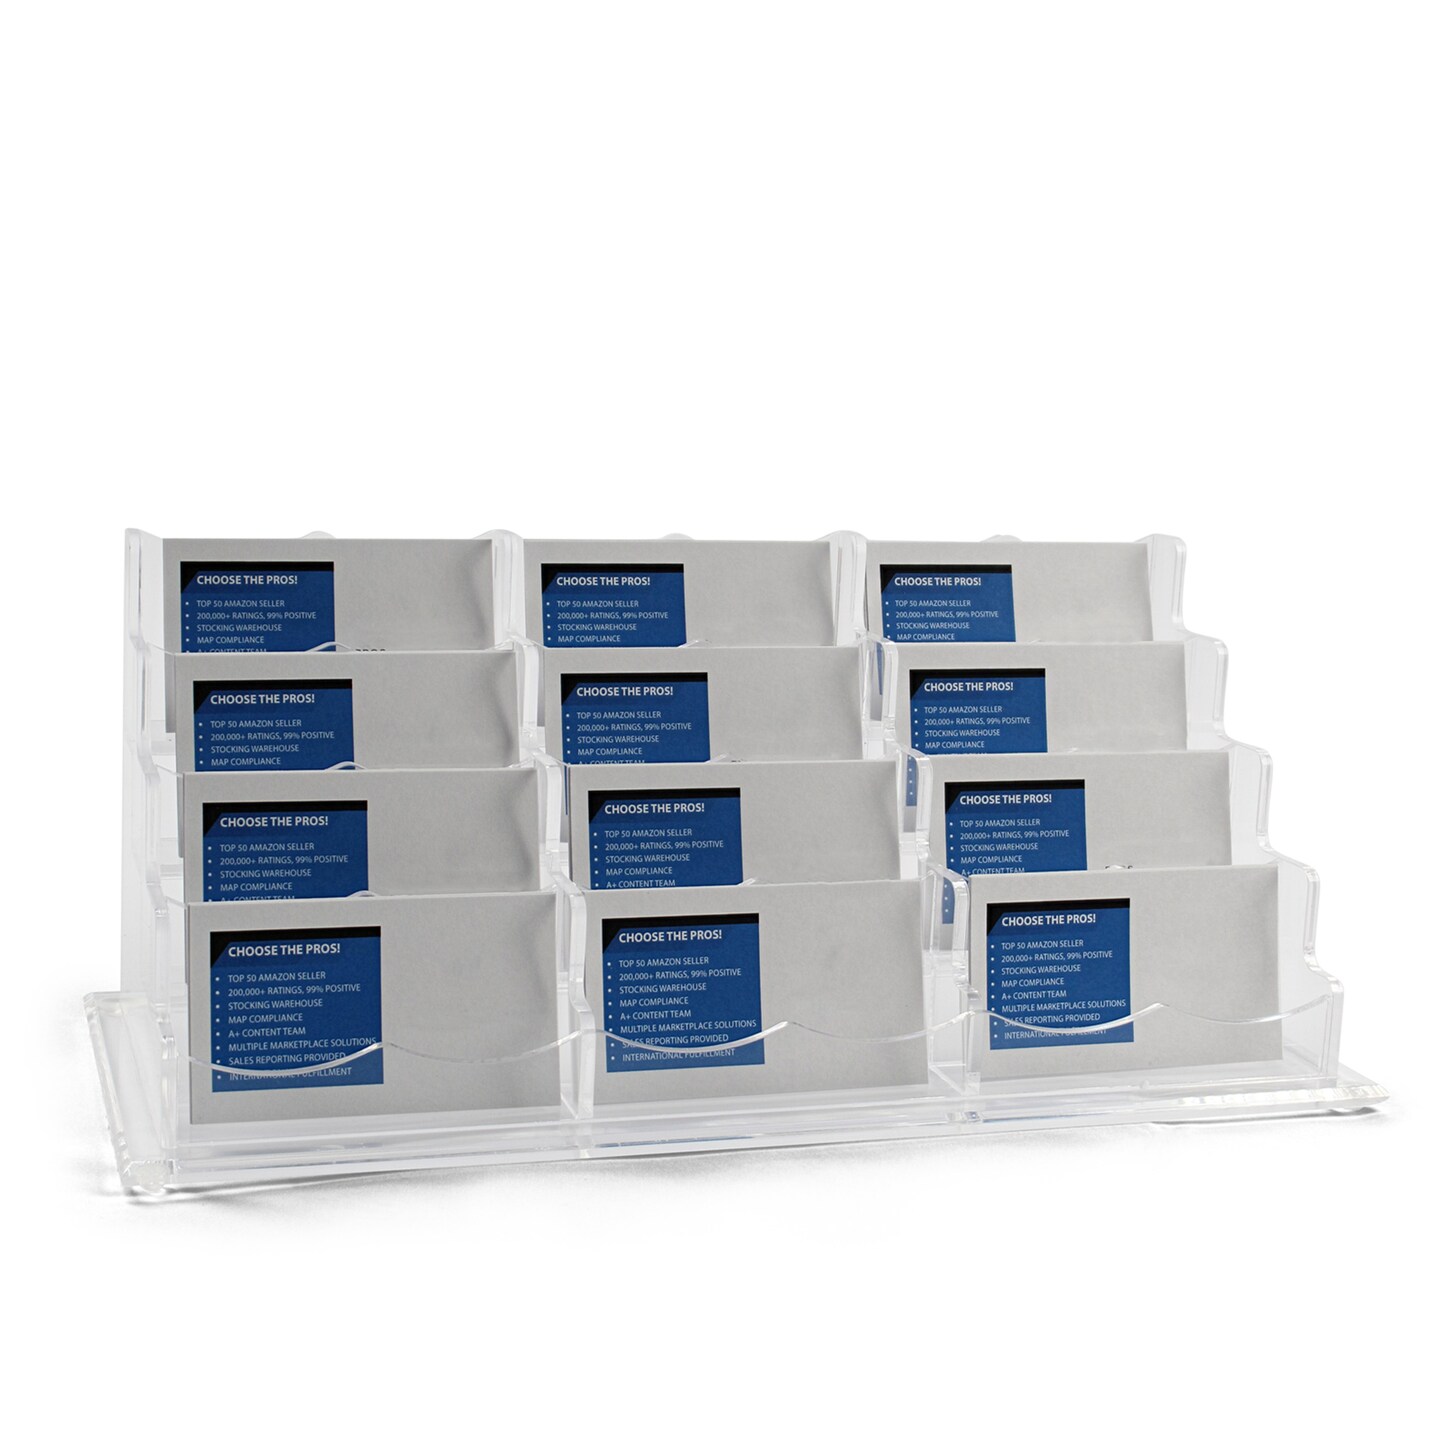 7Penn Clear Plastic Business Card Holder Display - 12 Slot Clear Desk Organizer